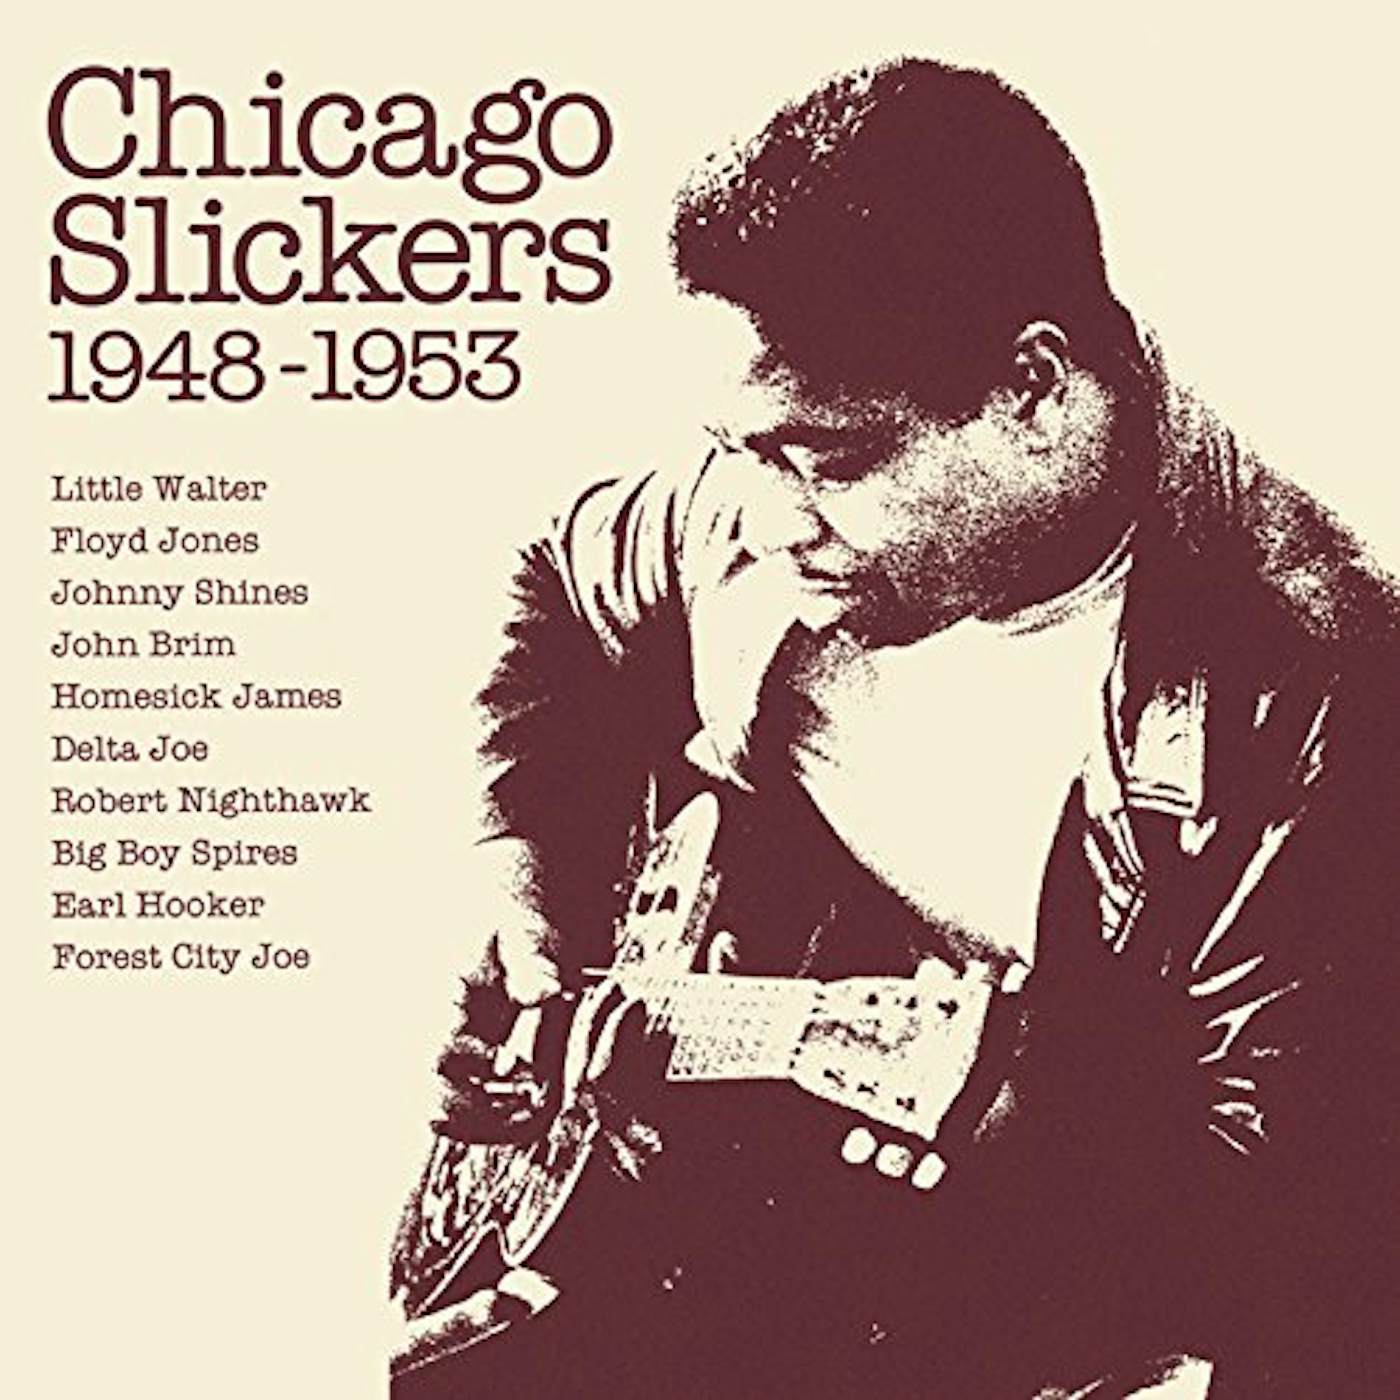 CHICAGO SLICKERS 1948-1953 / VARIOUS Vinyl Record